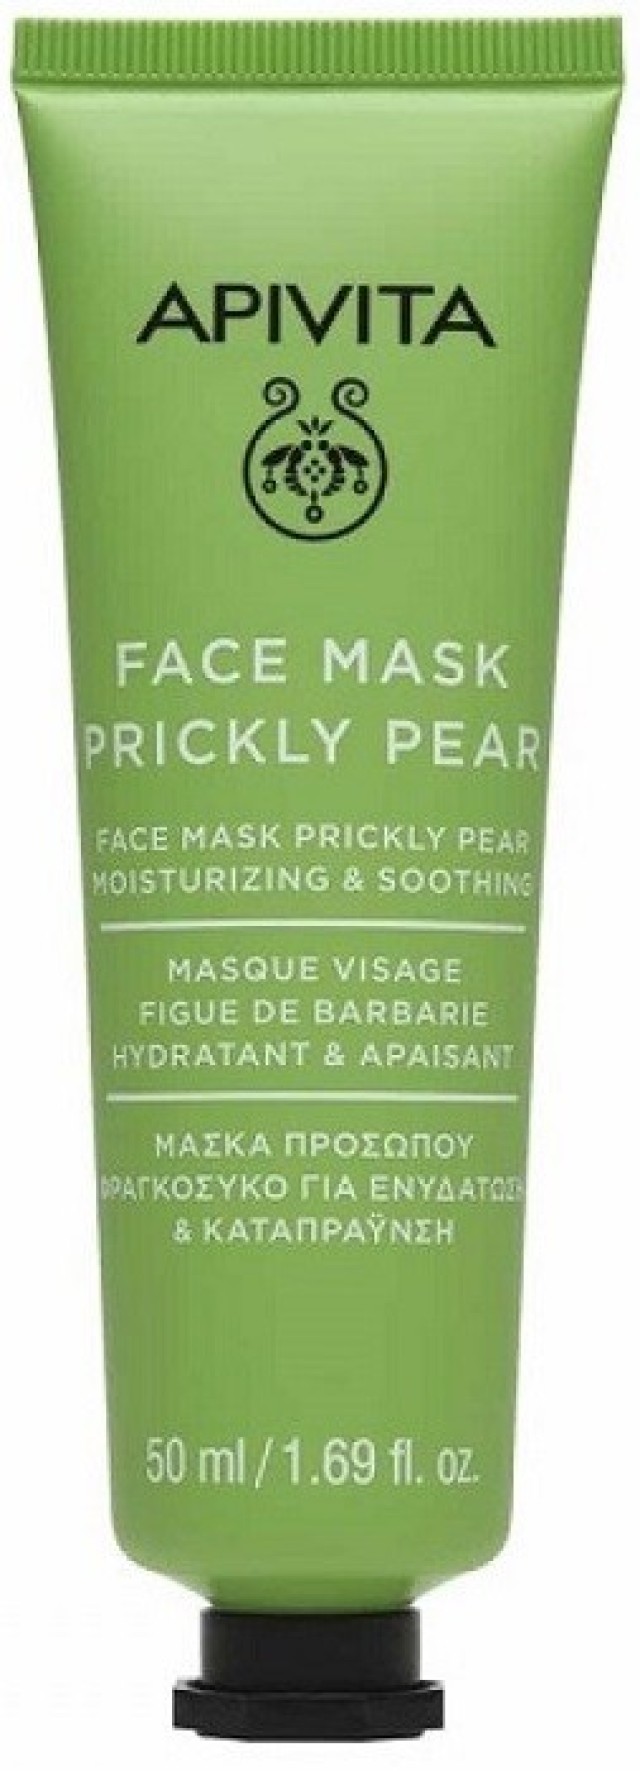 Apivita Face Mask Prickly Pear Μάσκα Προσώπου με Φραγκόσυκο για Ενυδάτωση & Καταπράυνση 50ml